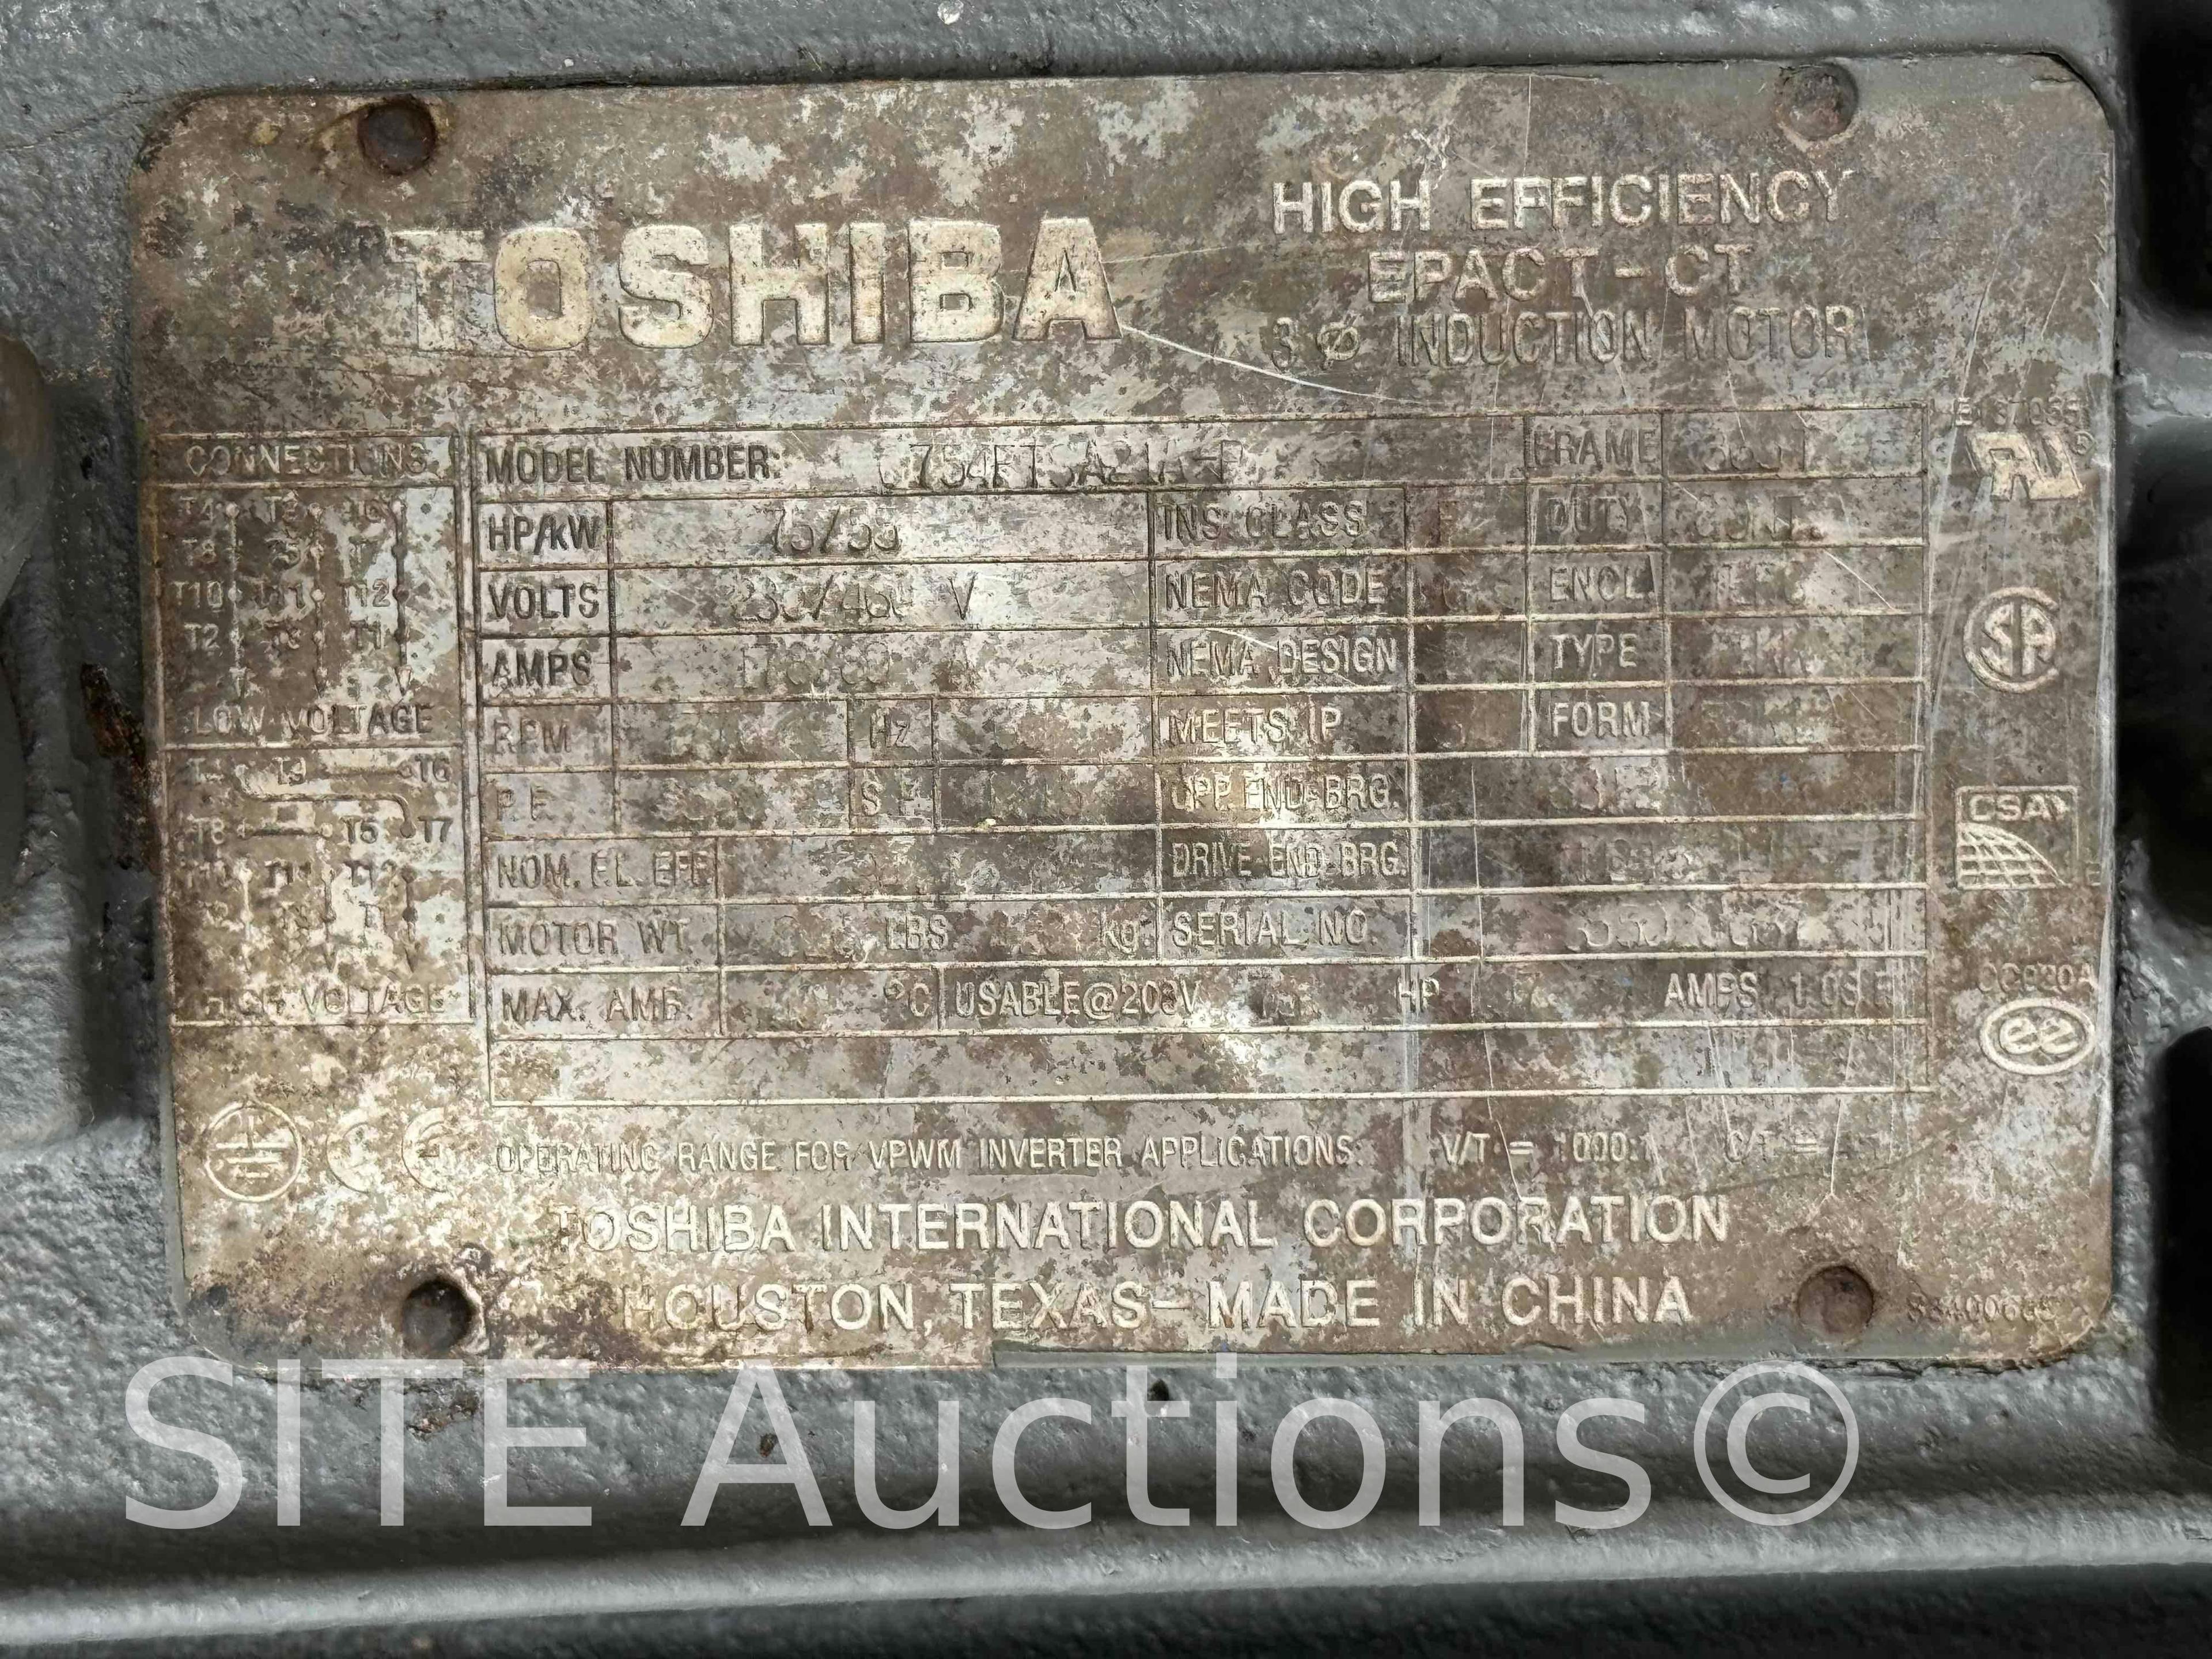 Toshiba 75HP Electric Motor - UNUSED